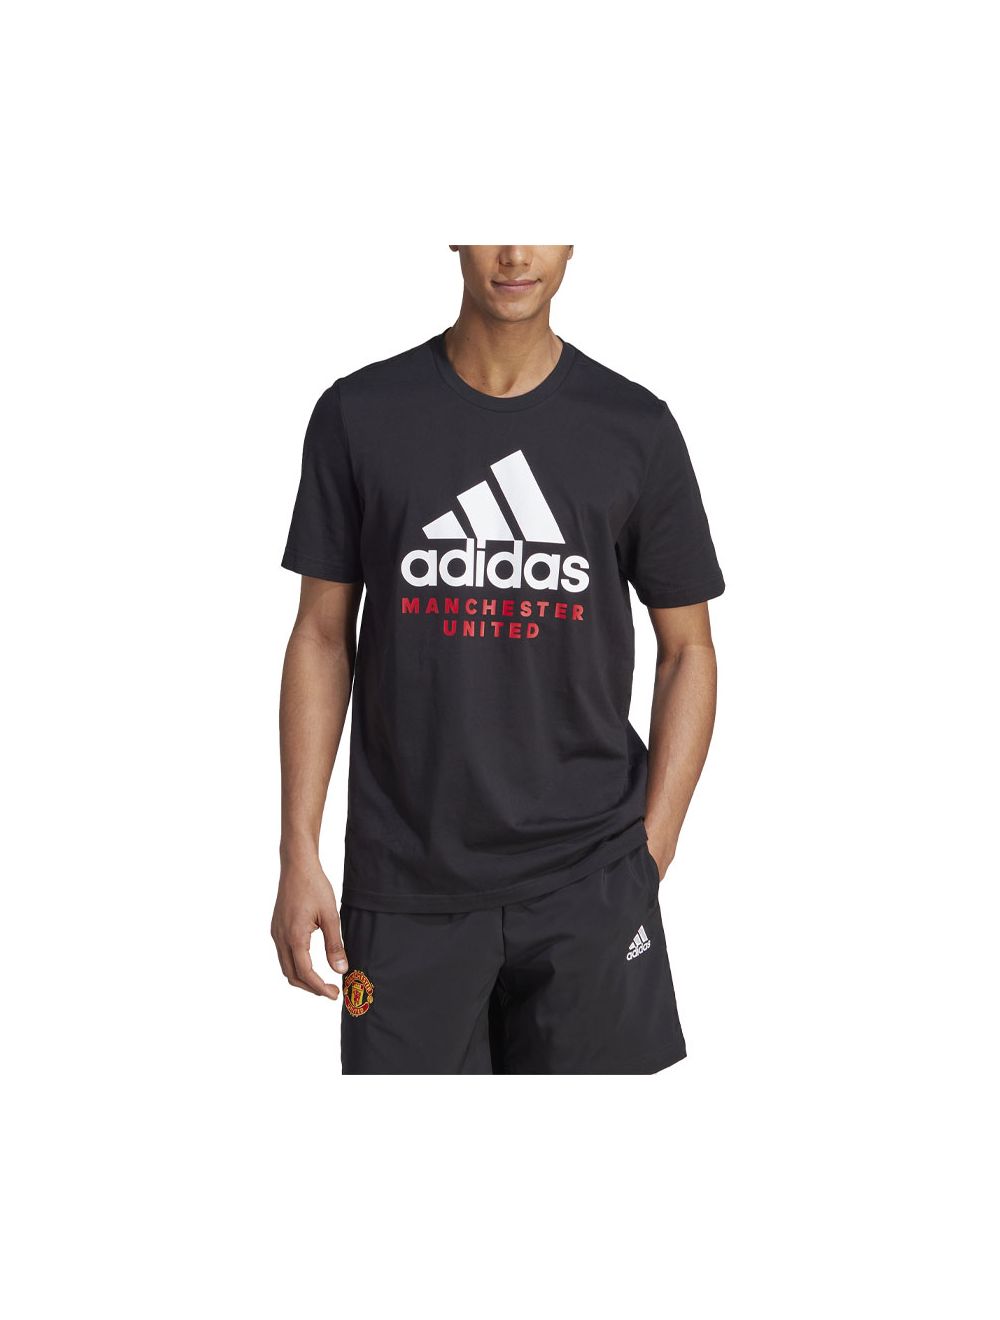 Vooravond gevoeligheid gewelddadig Shop Adidas Manchester United DNA T-shirt Black | Studio 88